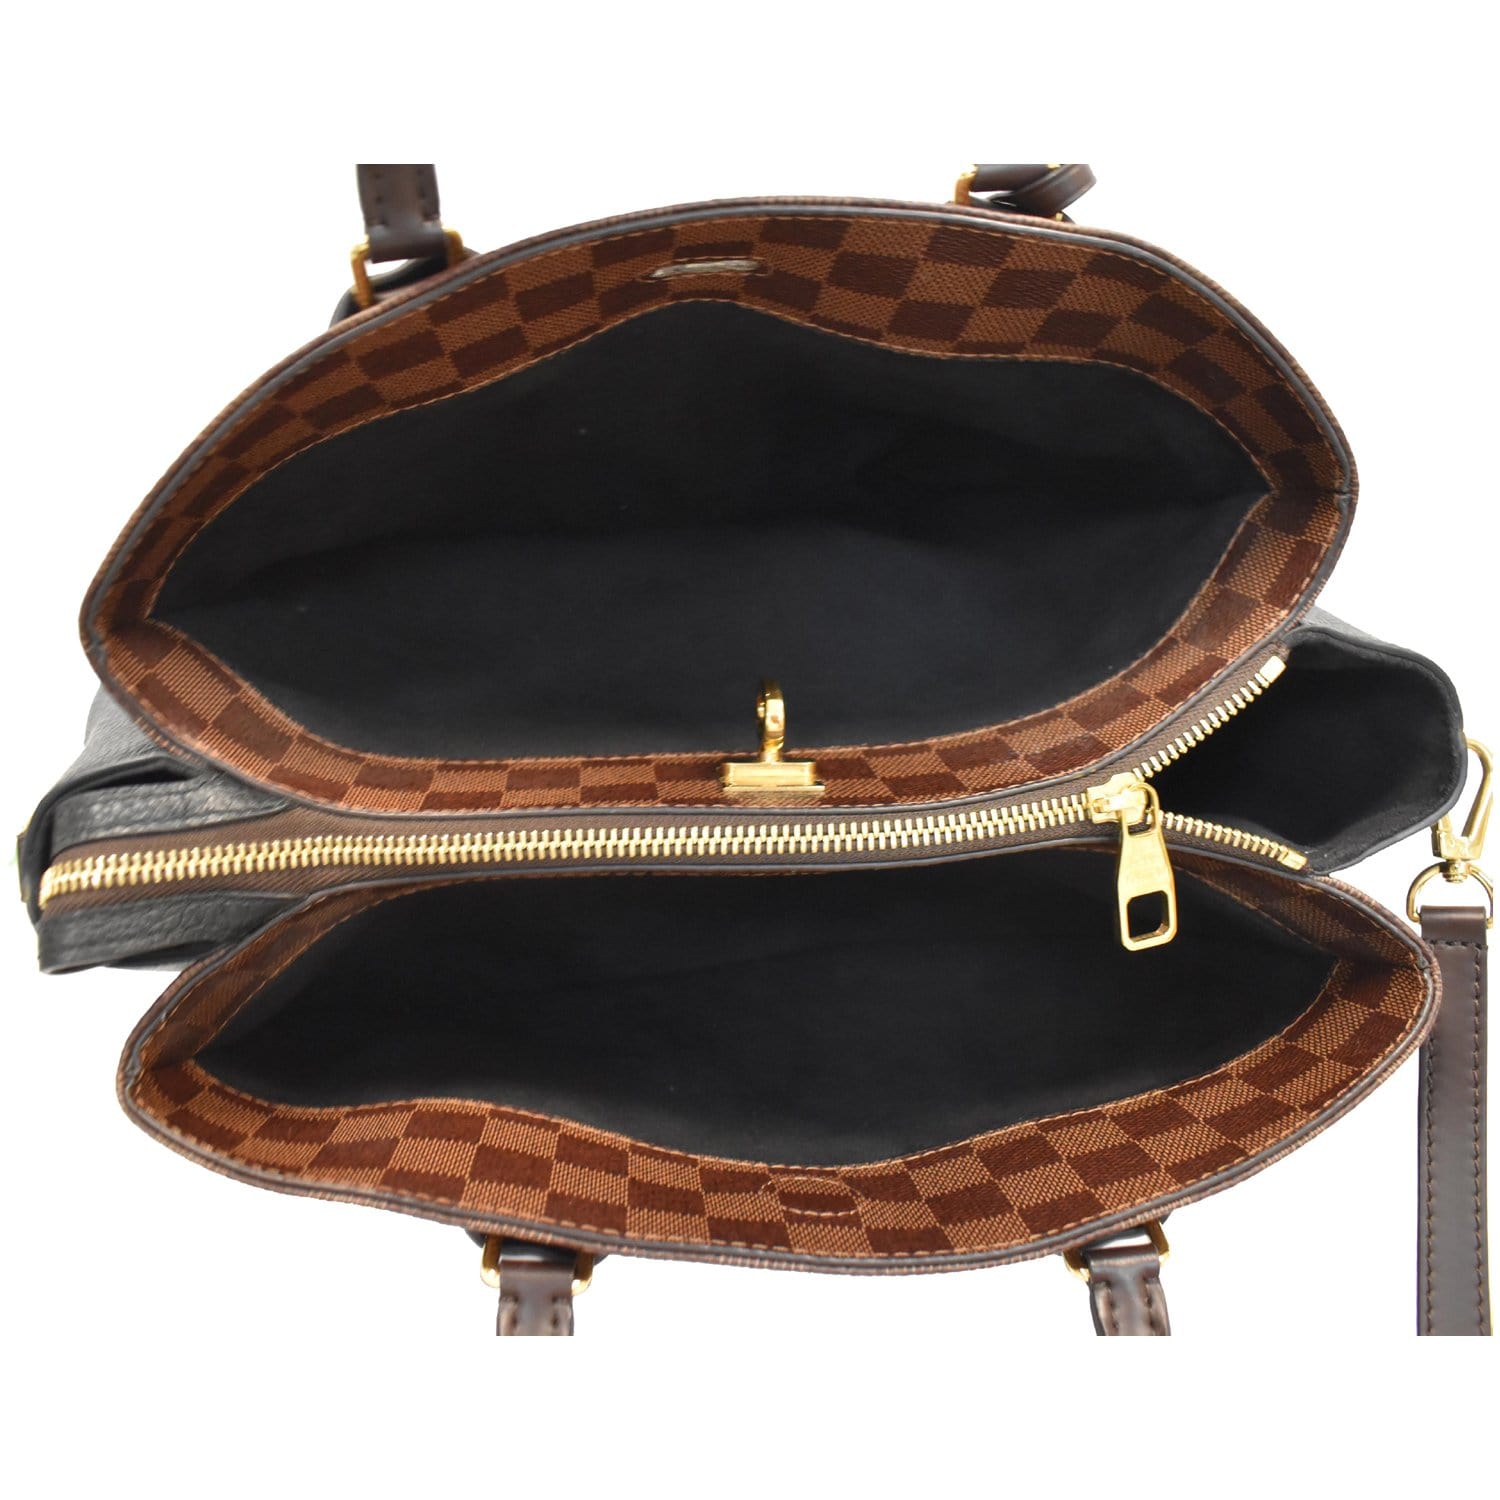 Louis Vuitton Normandy handbag Stock Photo - Alamy